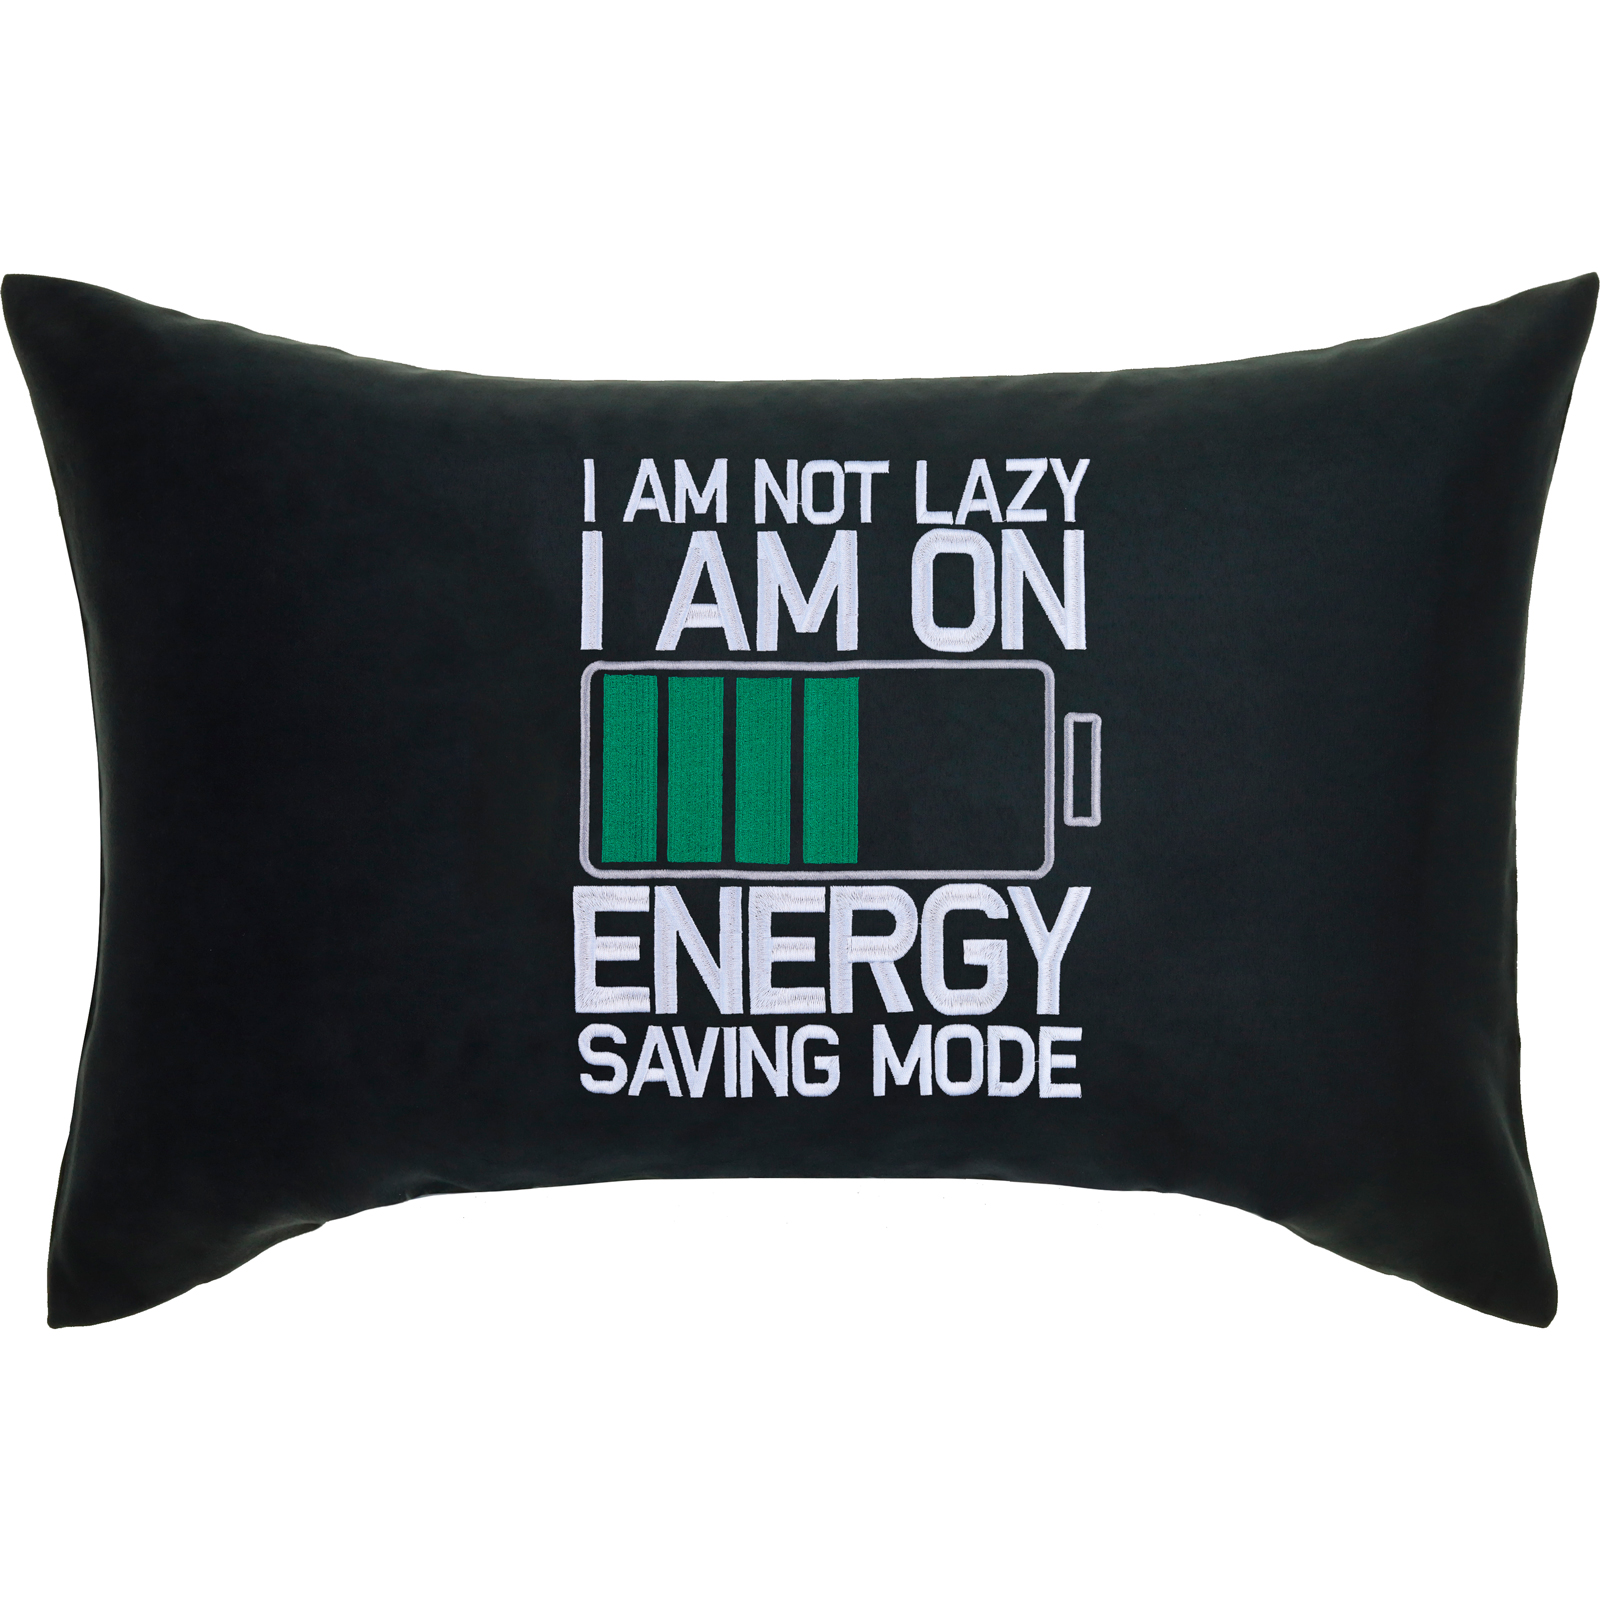 I am on energy saving mode - Kissen